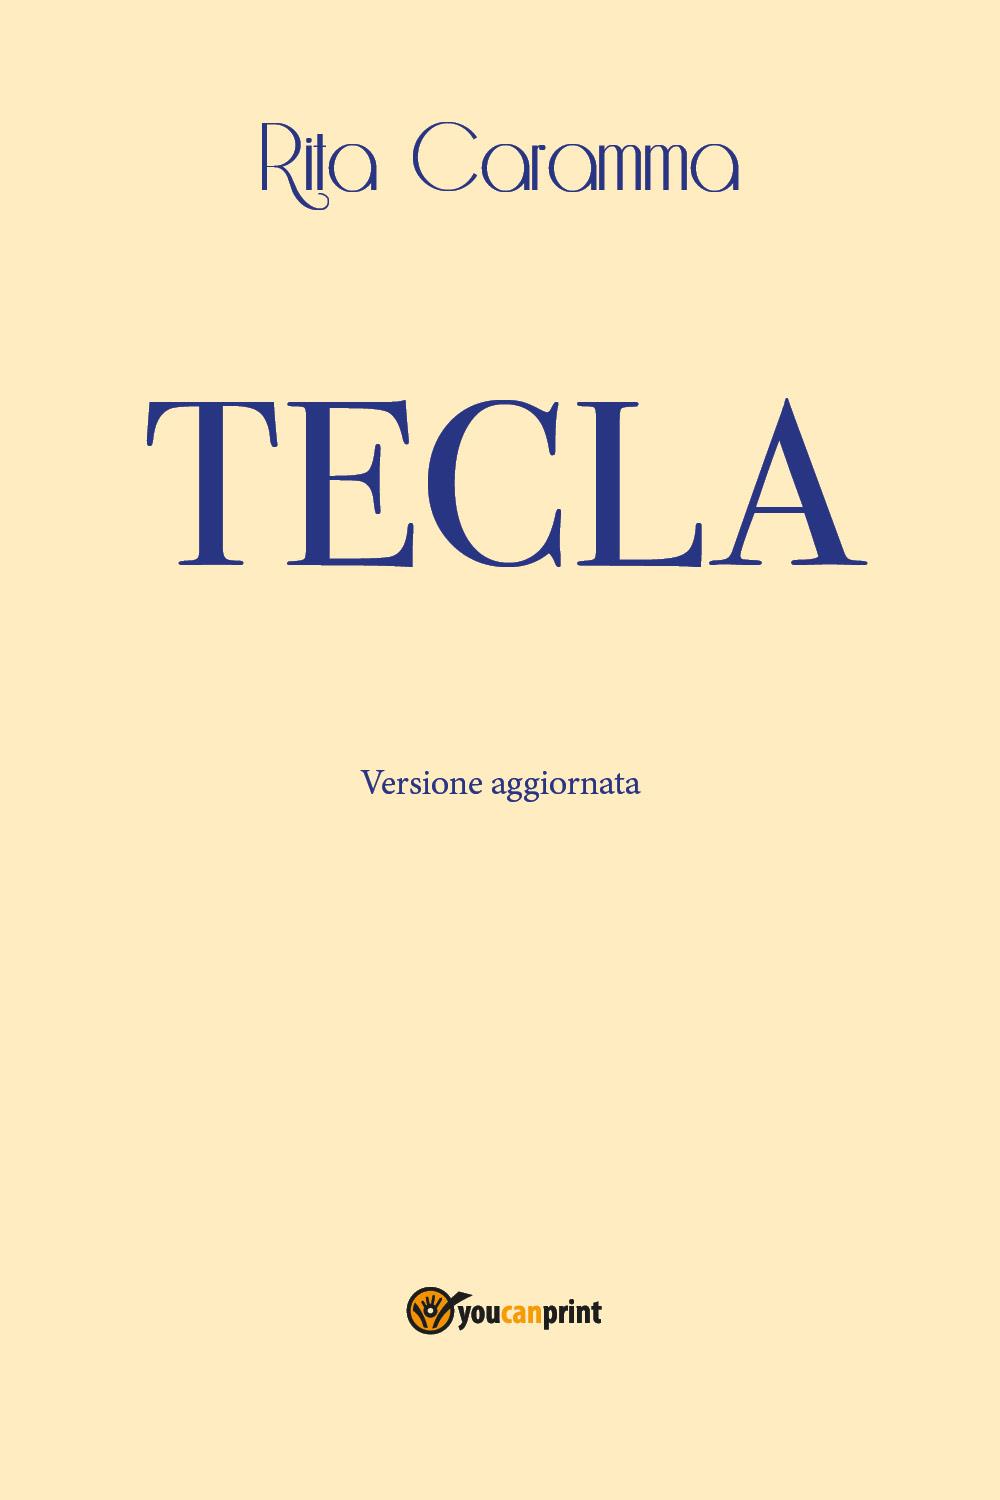 Tecla